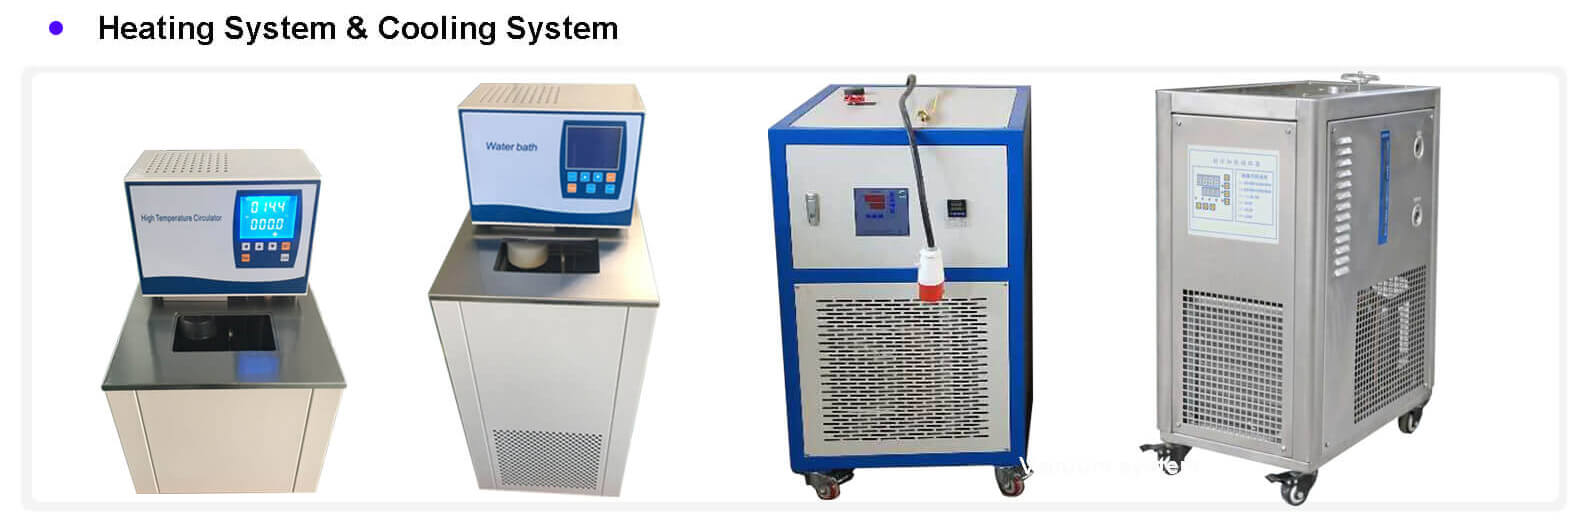 heating and cooling circulators of molecular distillation equipment